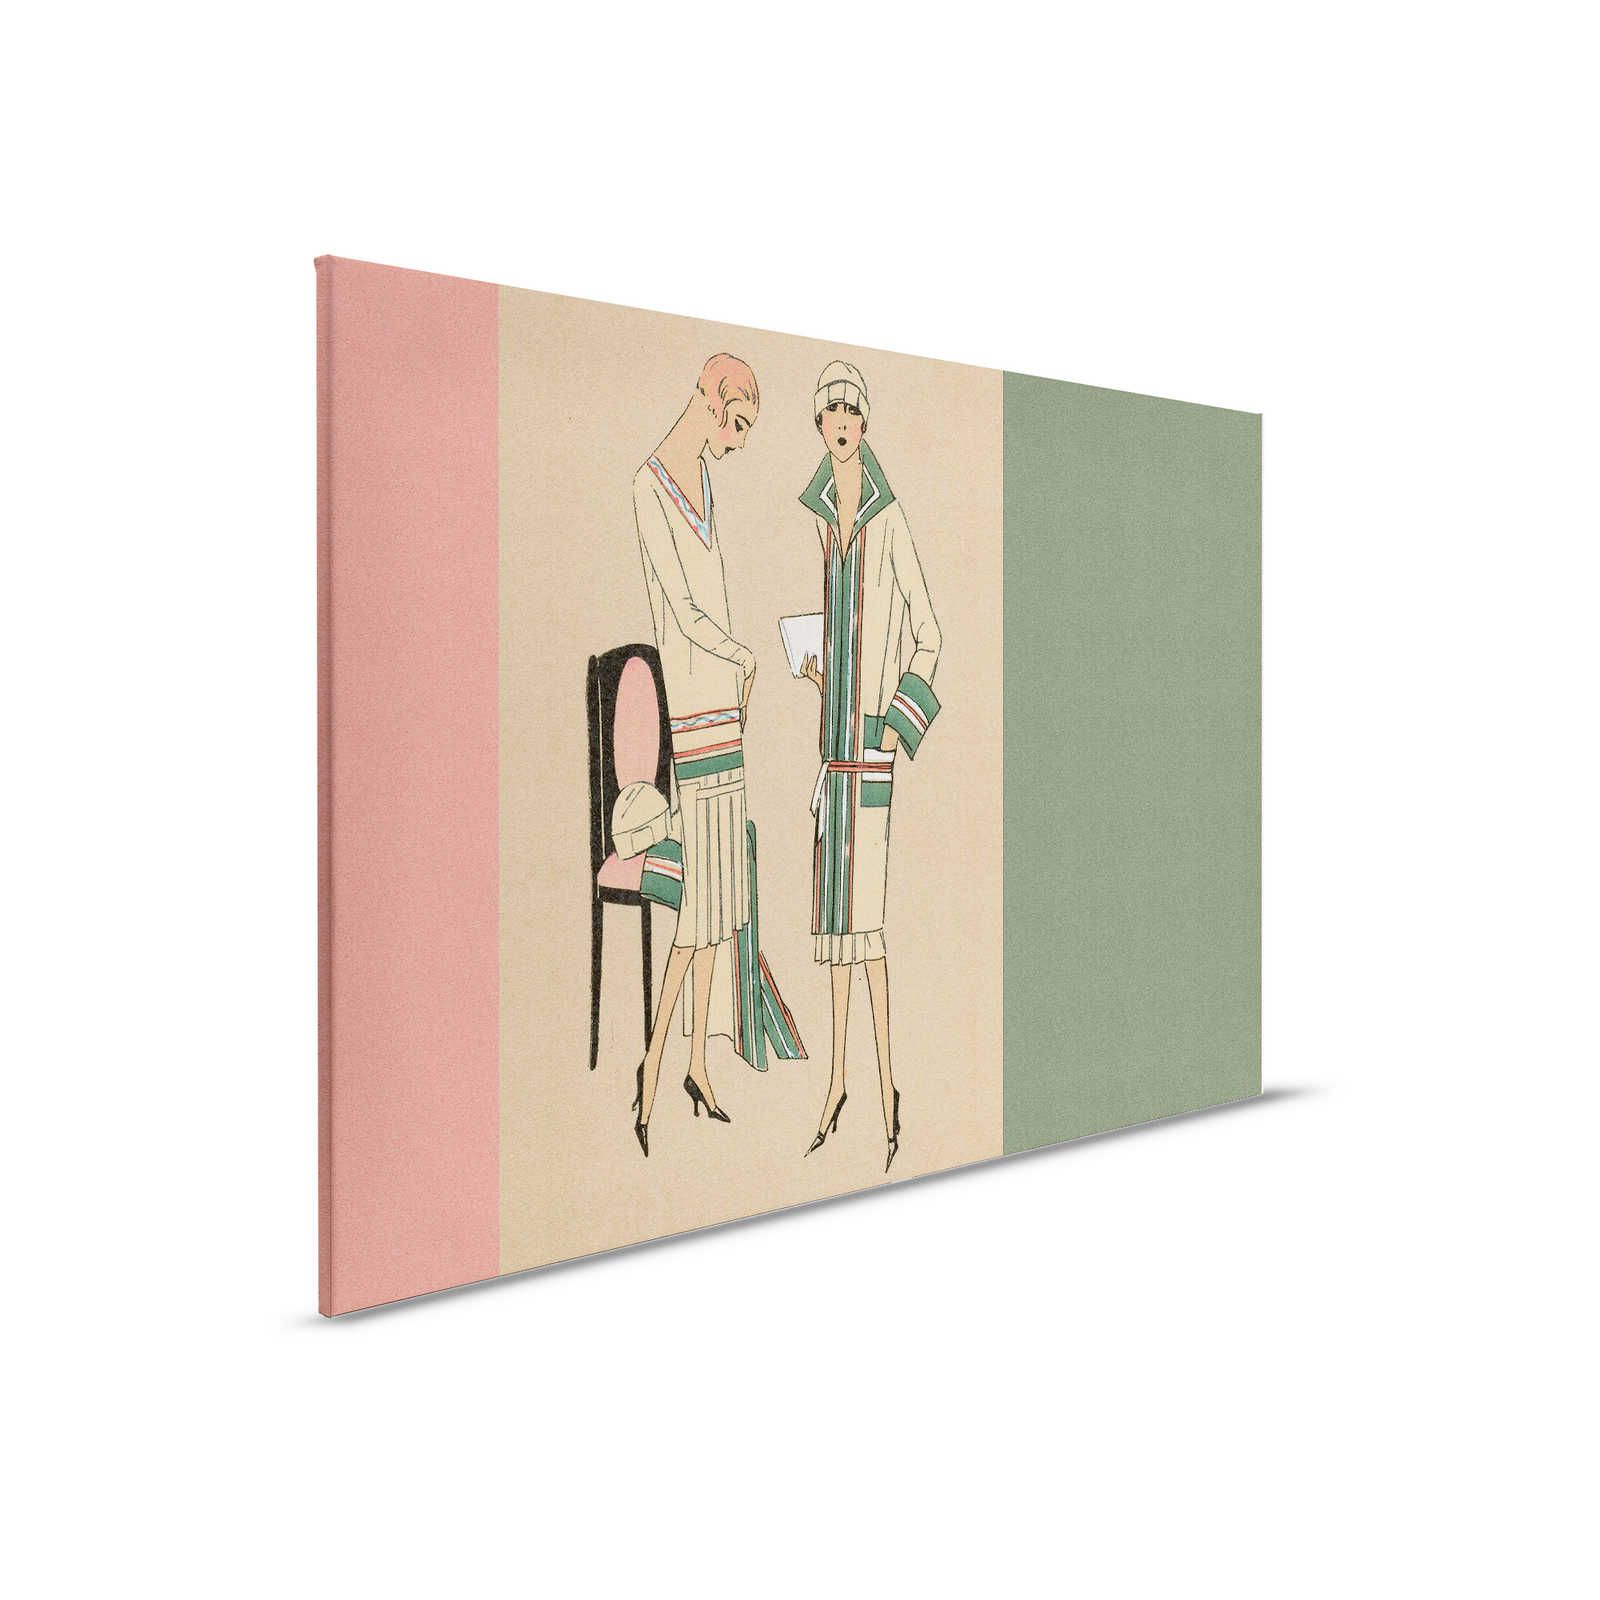 Parisienne 1 - Canvas schilderij kunstprint Kleding Twentiers Stijl - 0,90 m x 0,60 m
